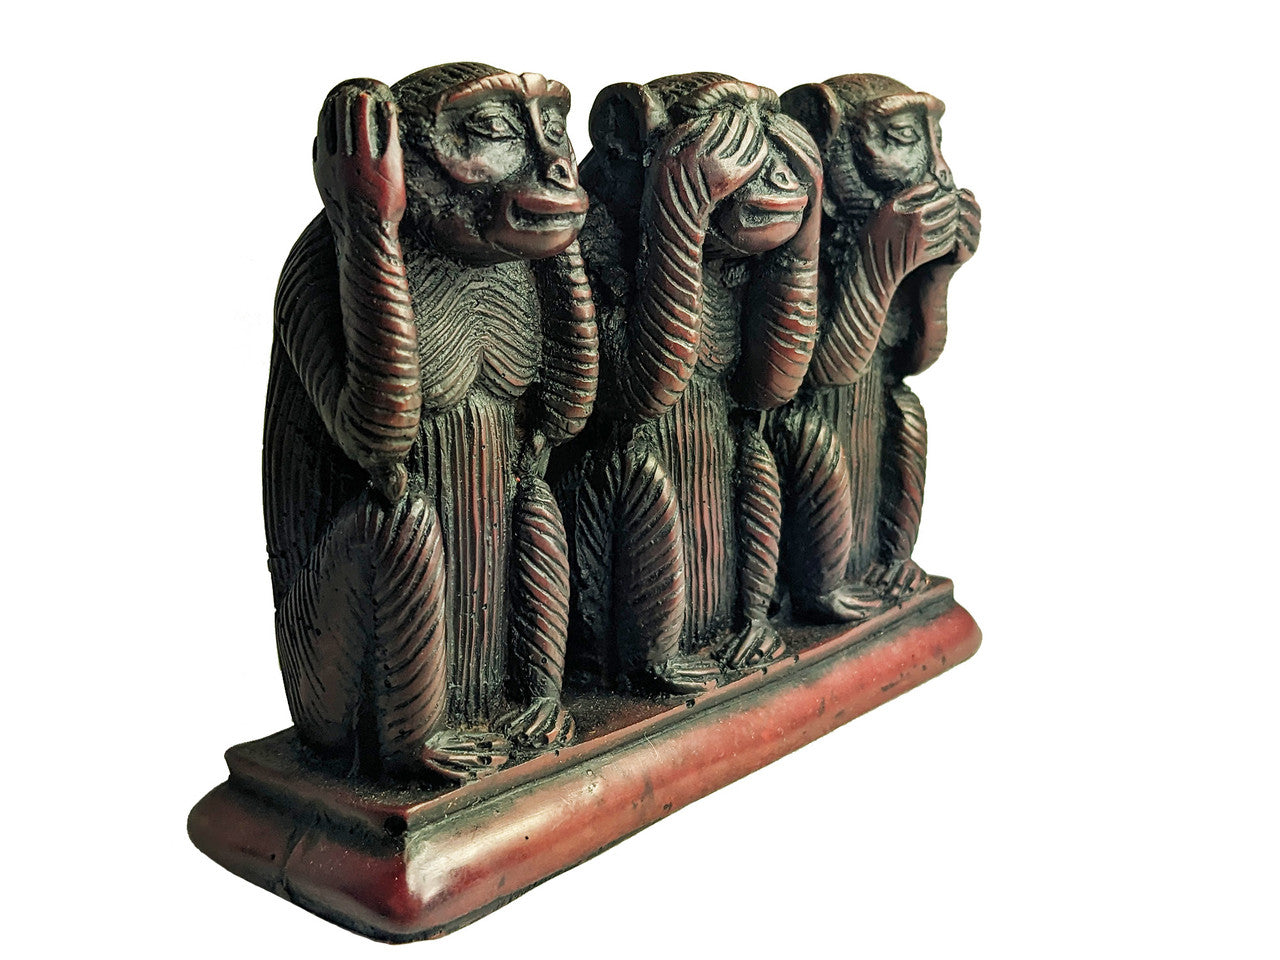 Three monkeys resin statue